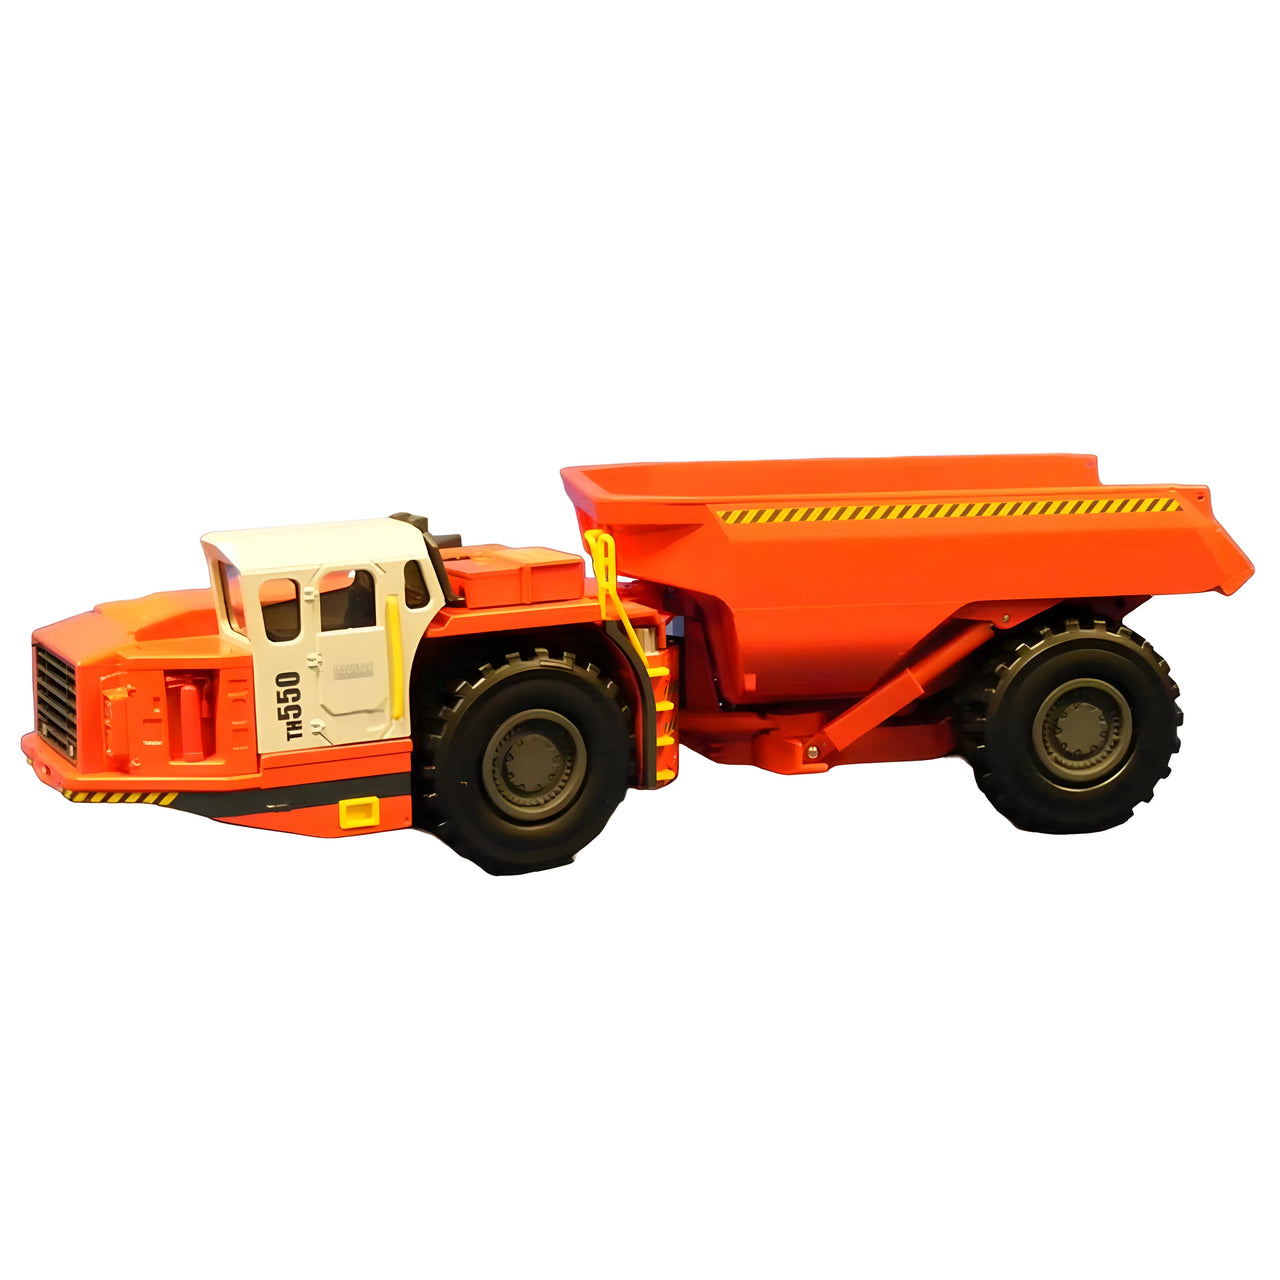 2729-02 Sandvik TH550 Low Profile Mining Truck 1:50 Scale